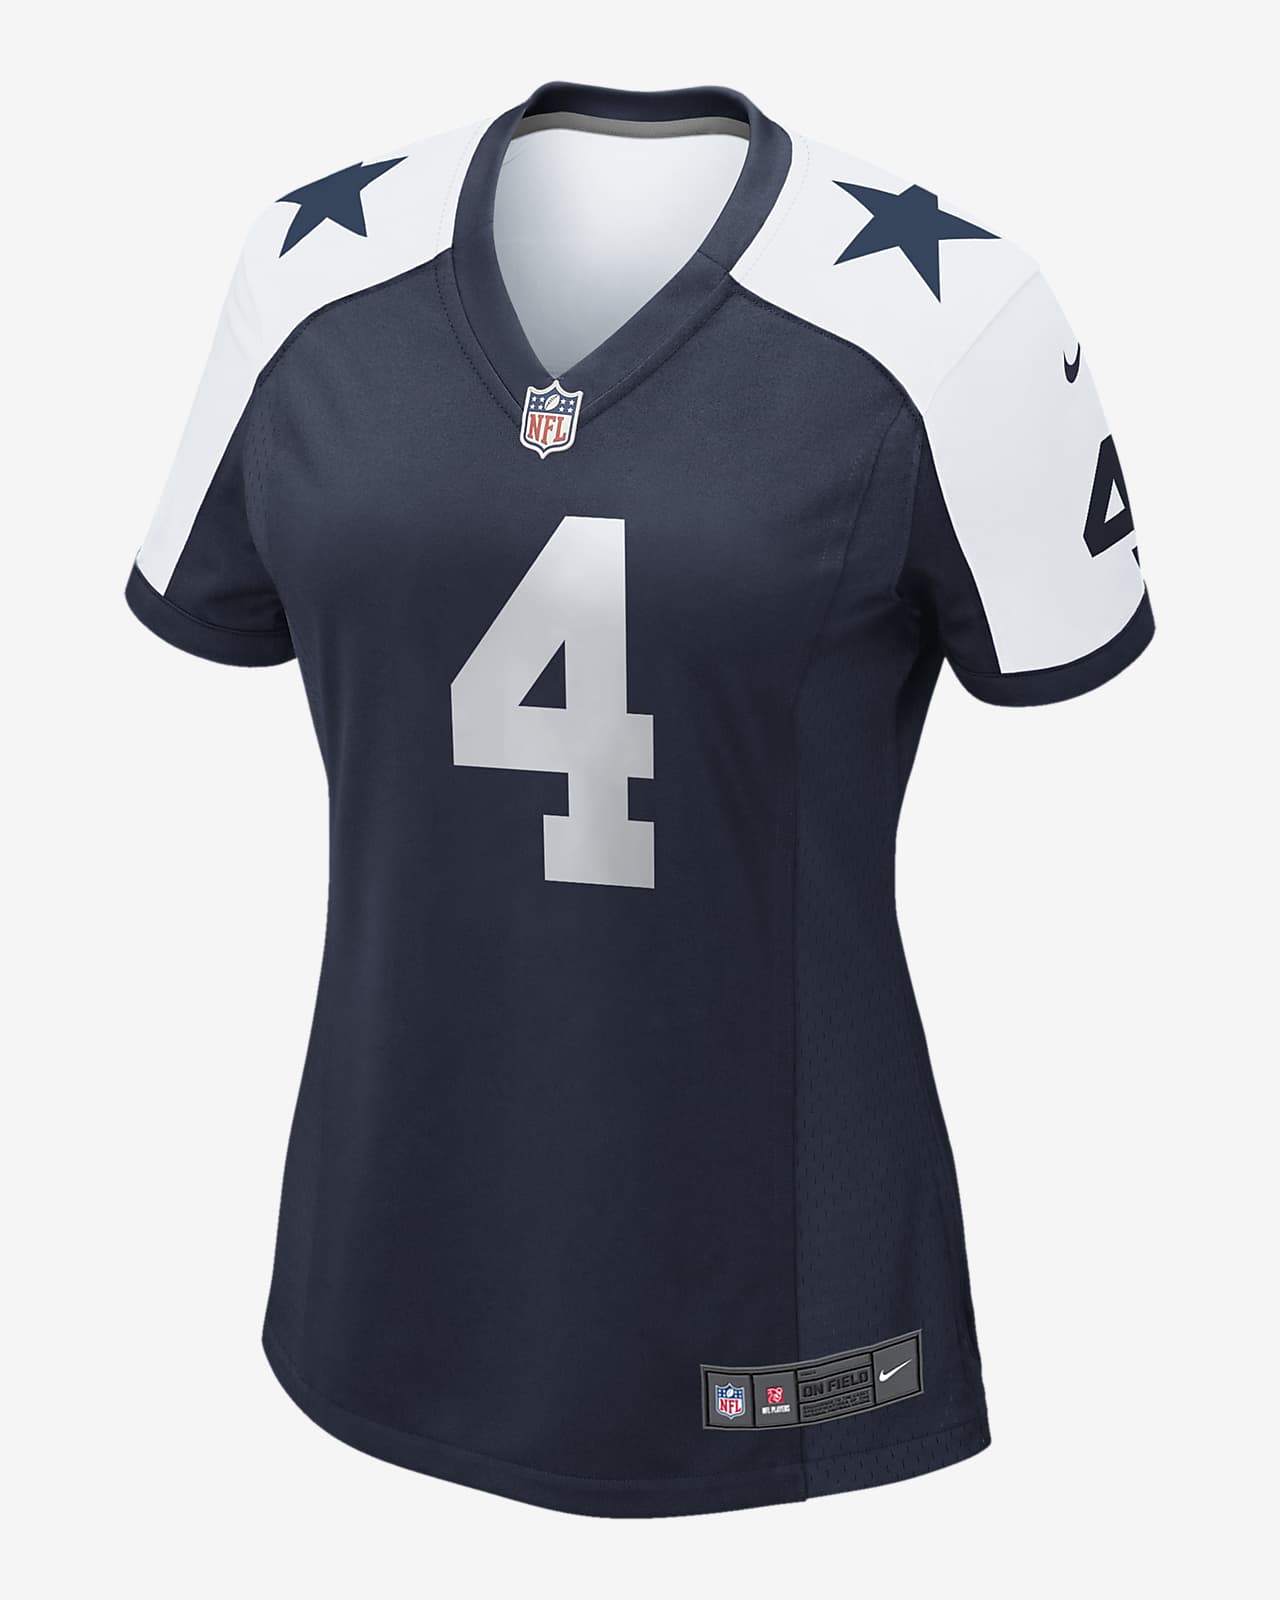 shop official US online NFL Women Football Certo Dallas Cowboys apparel  leggings & Jersey 